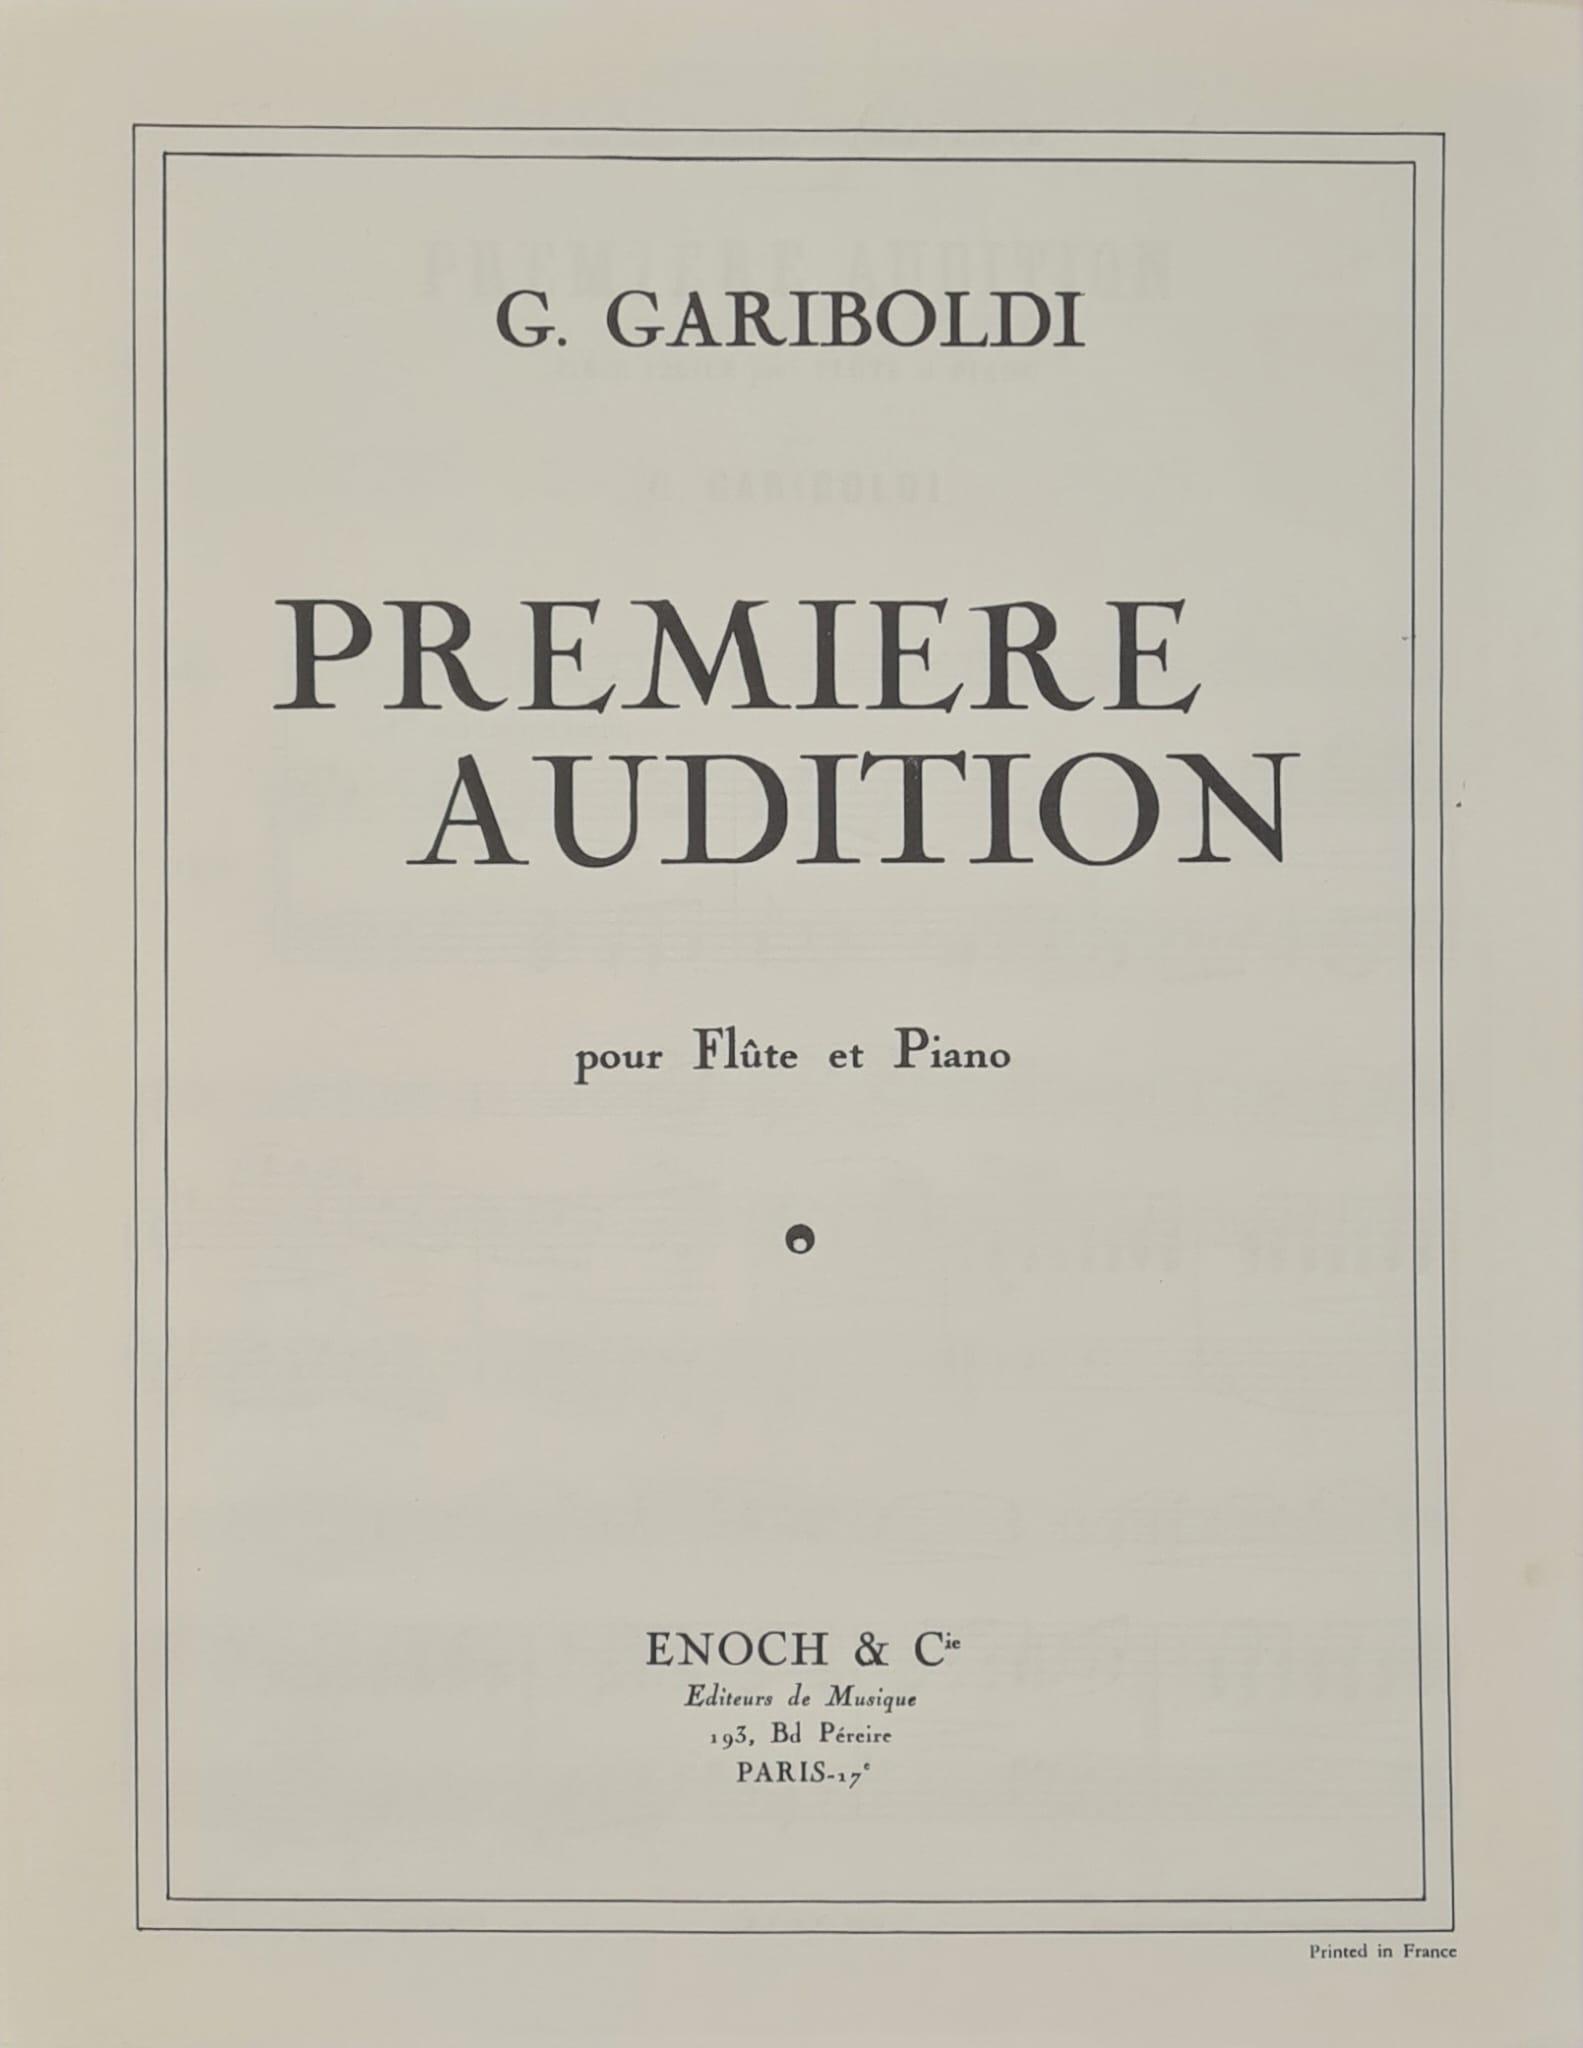 Première Audition, Giuseppe GARIBOLDI | Suono Flauti